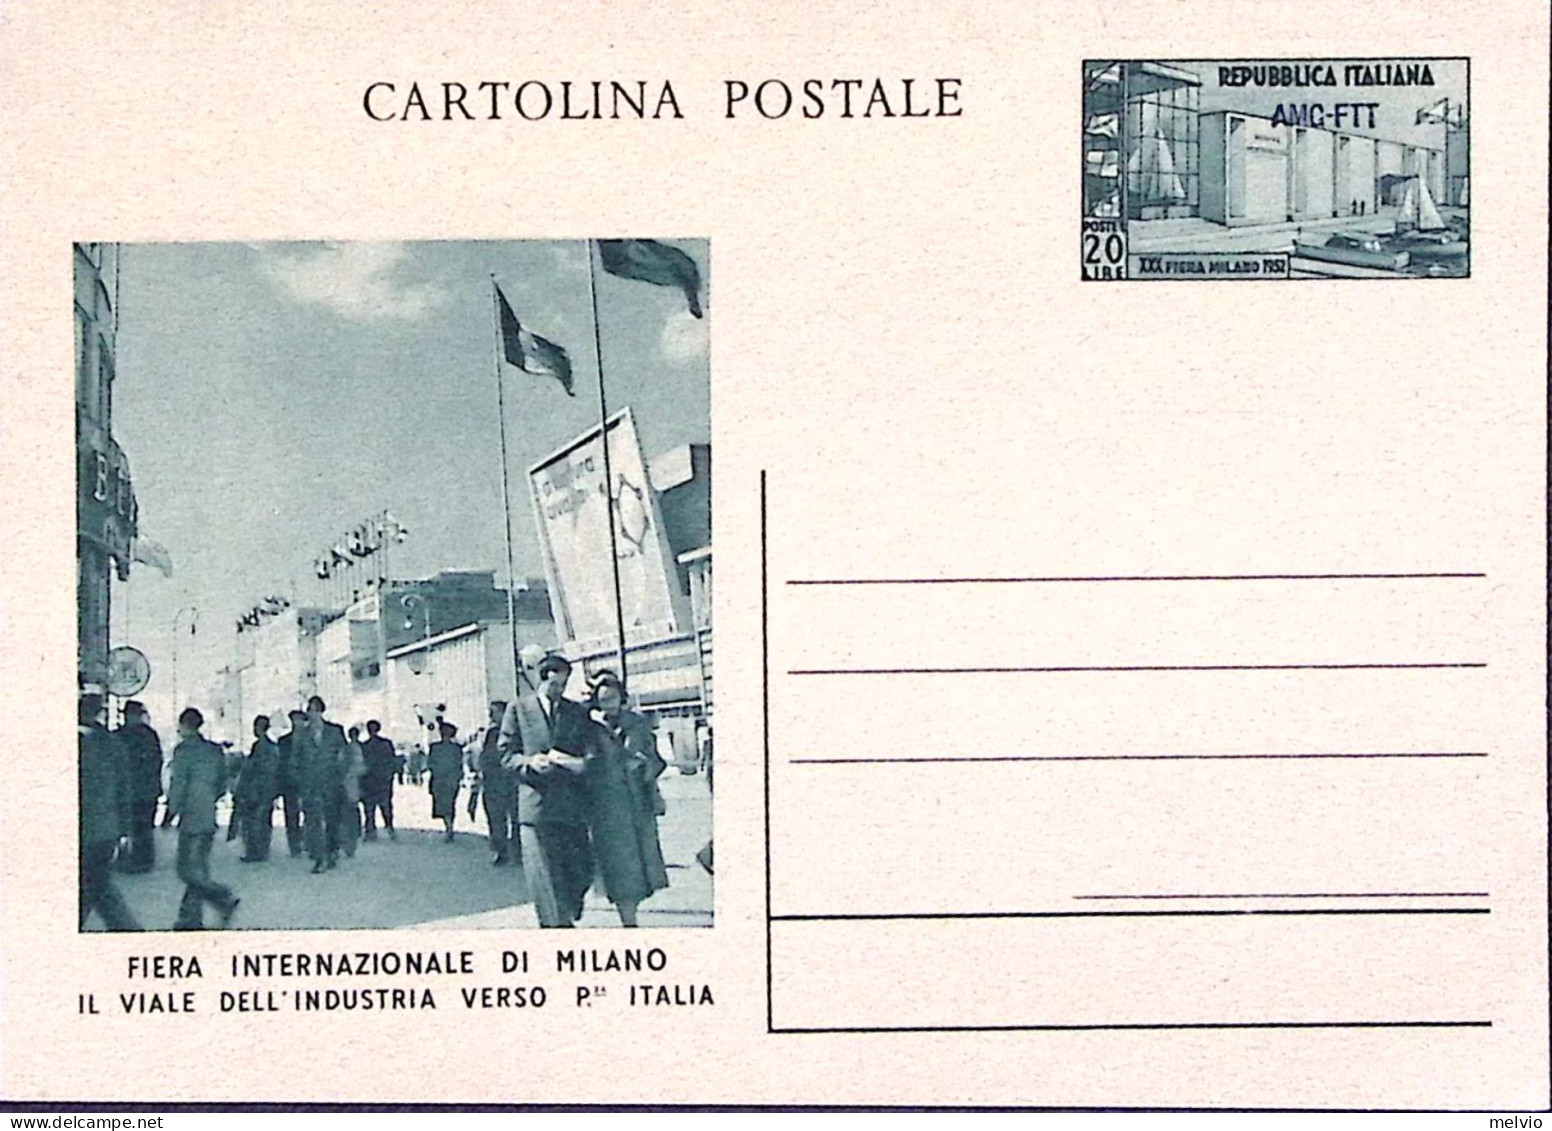 1952-AMG-FTT Cartolina Postale Fiera Milano Lire 20 Nuova - Poststempel